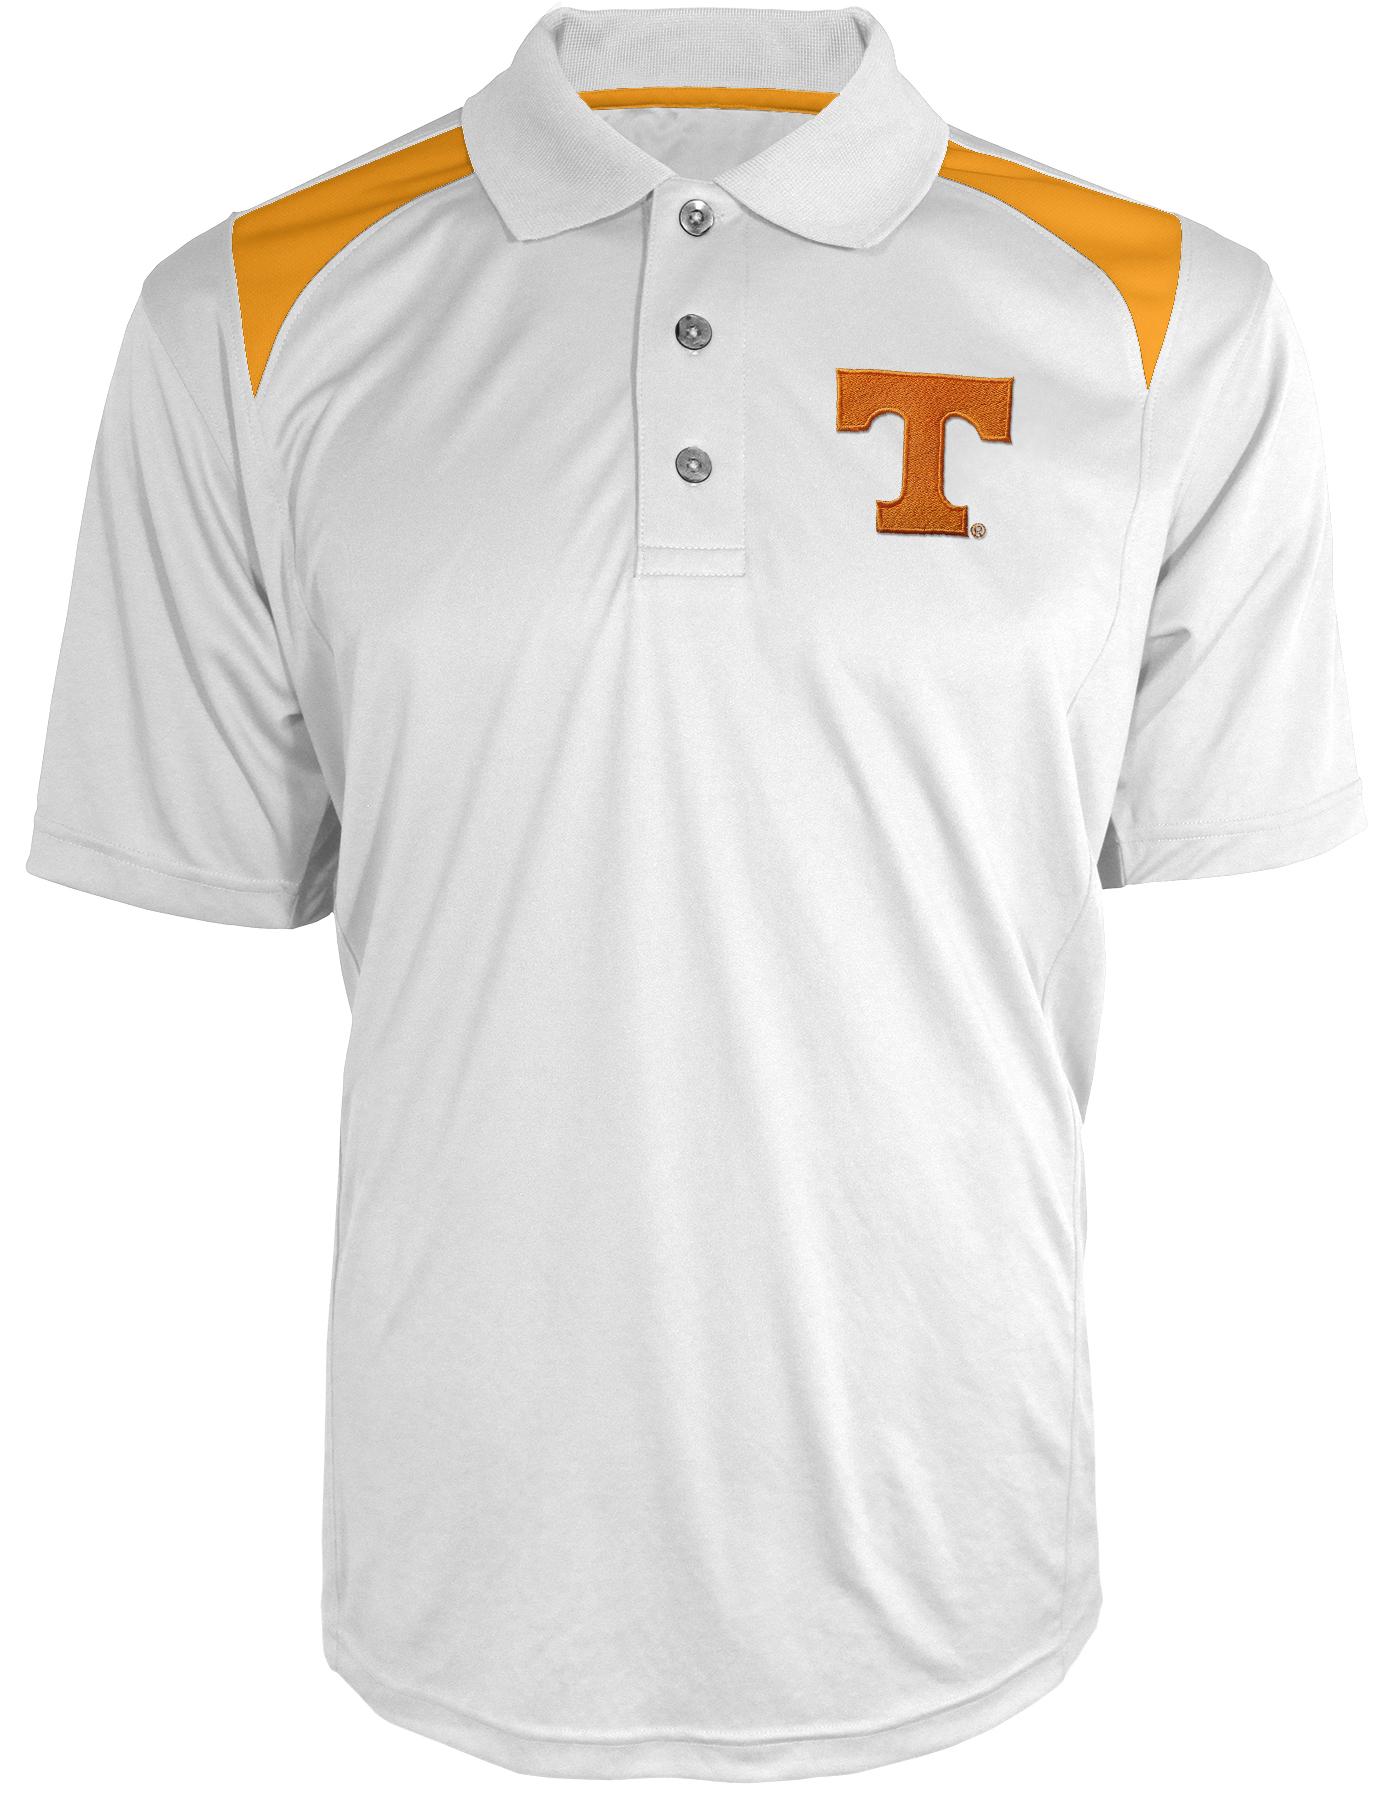 NCAA Men's Polo Shirt - University of Tennessee